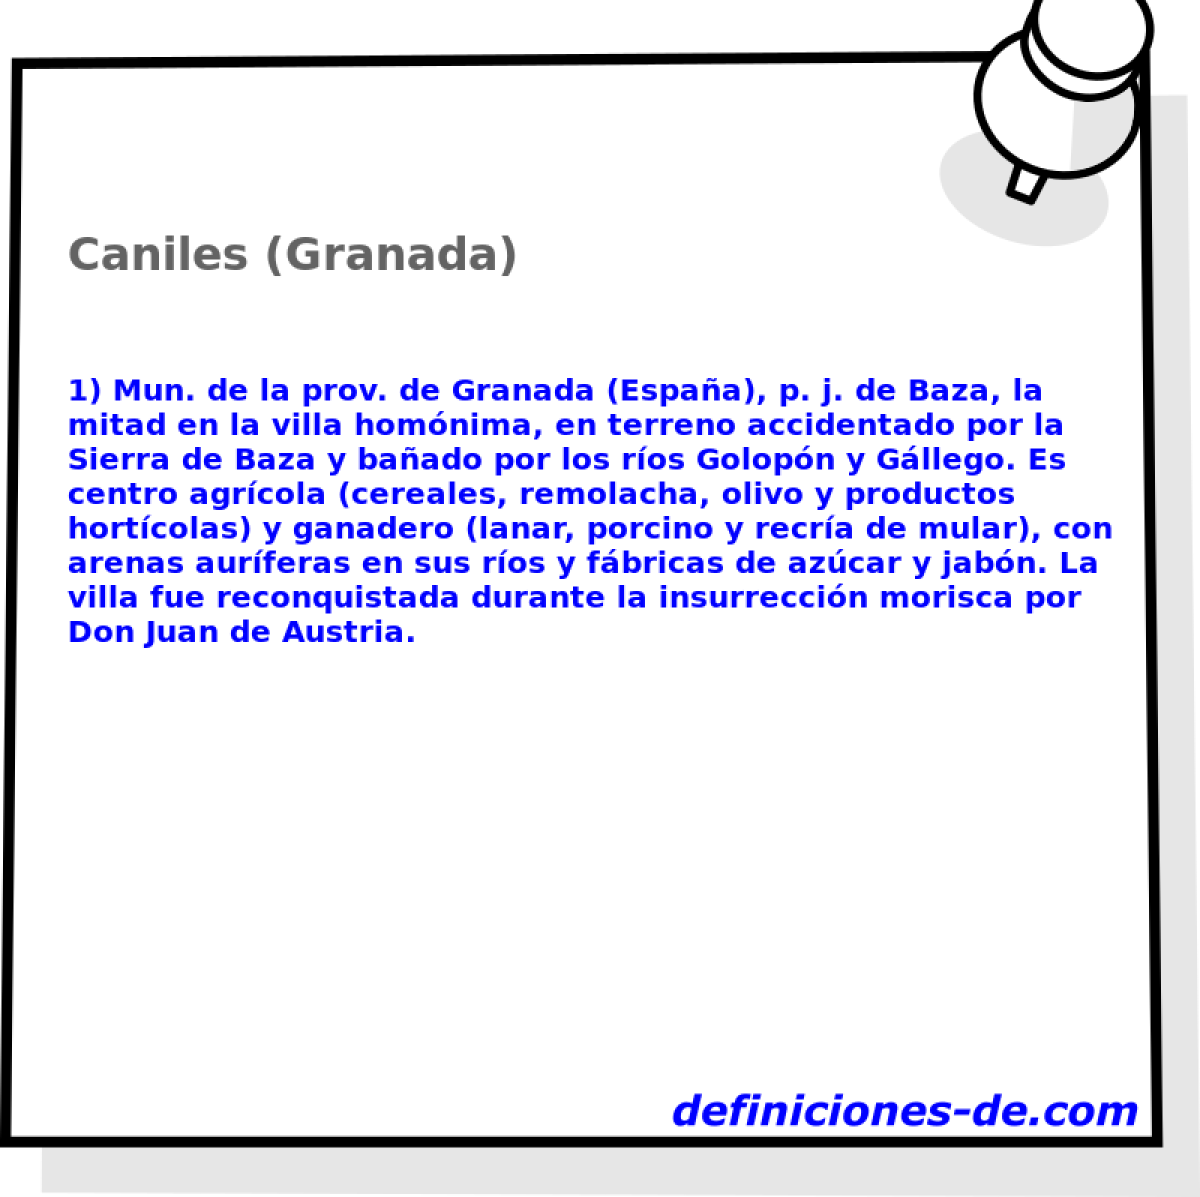 Caniles (Granada) 